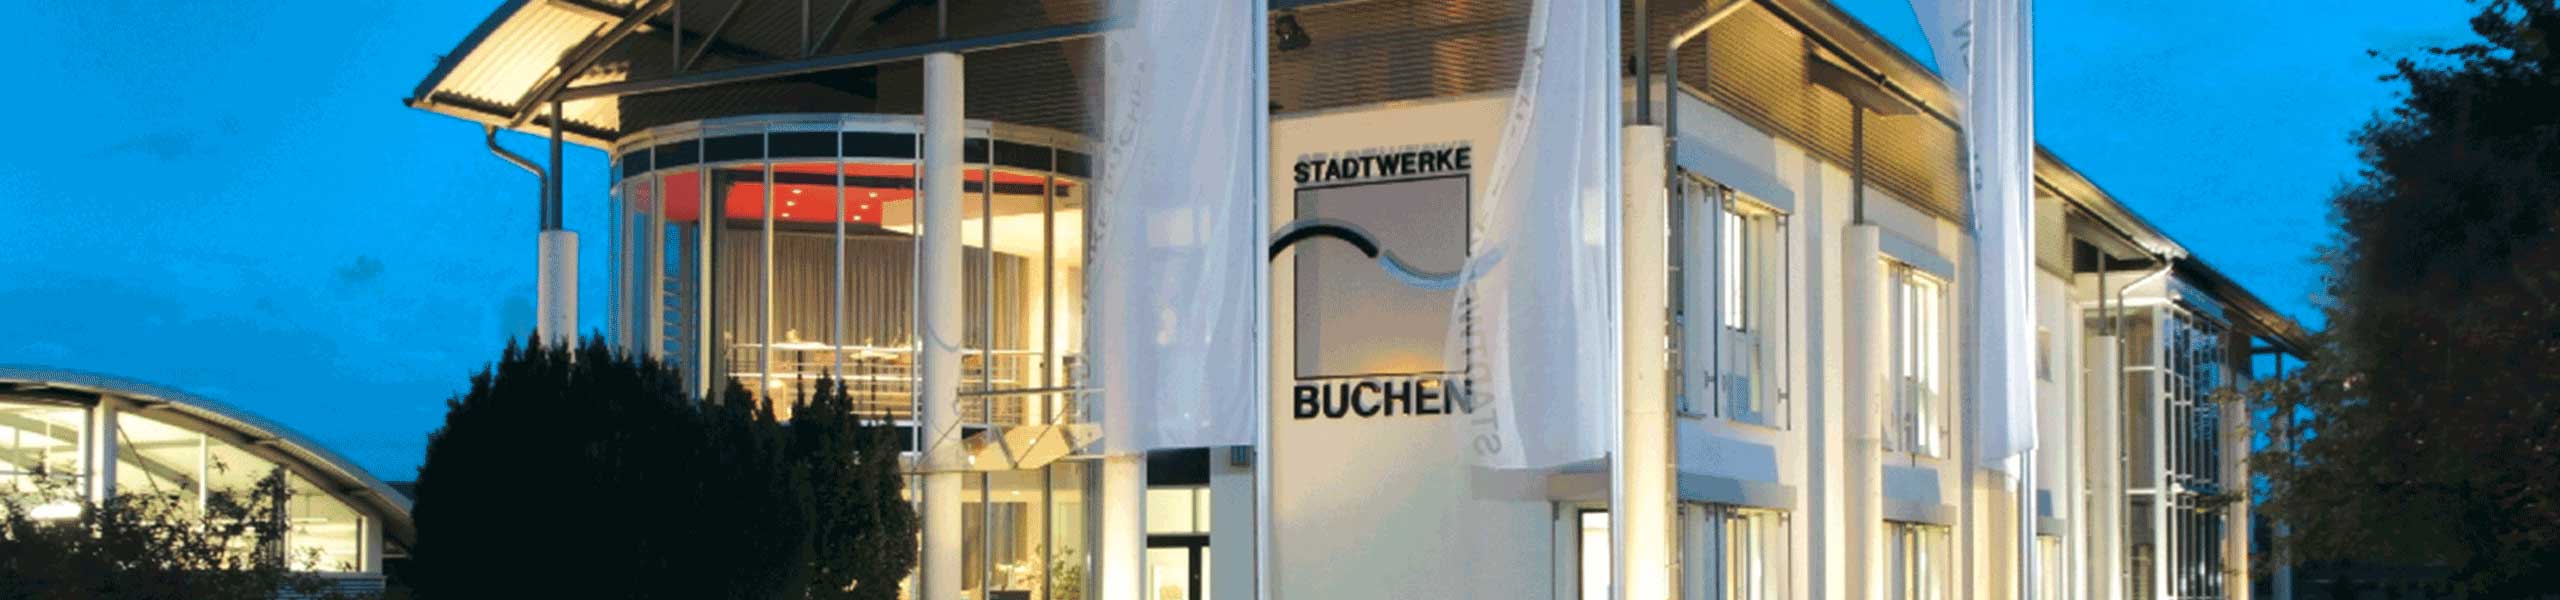 Stadtwerke Buchen GmbH & Co KG - Aktuelles